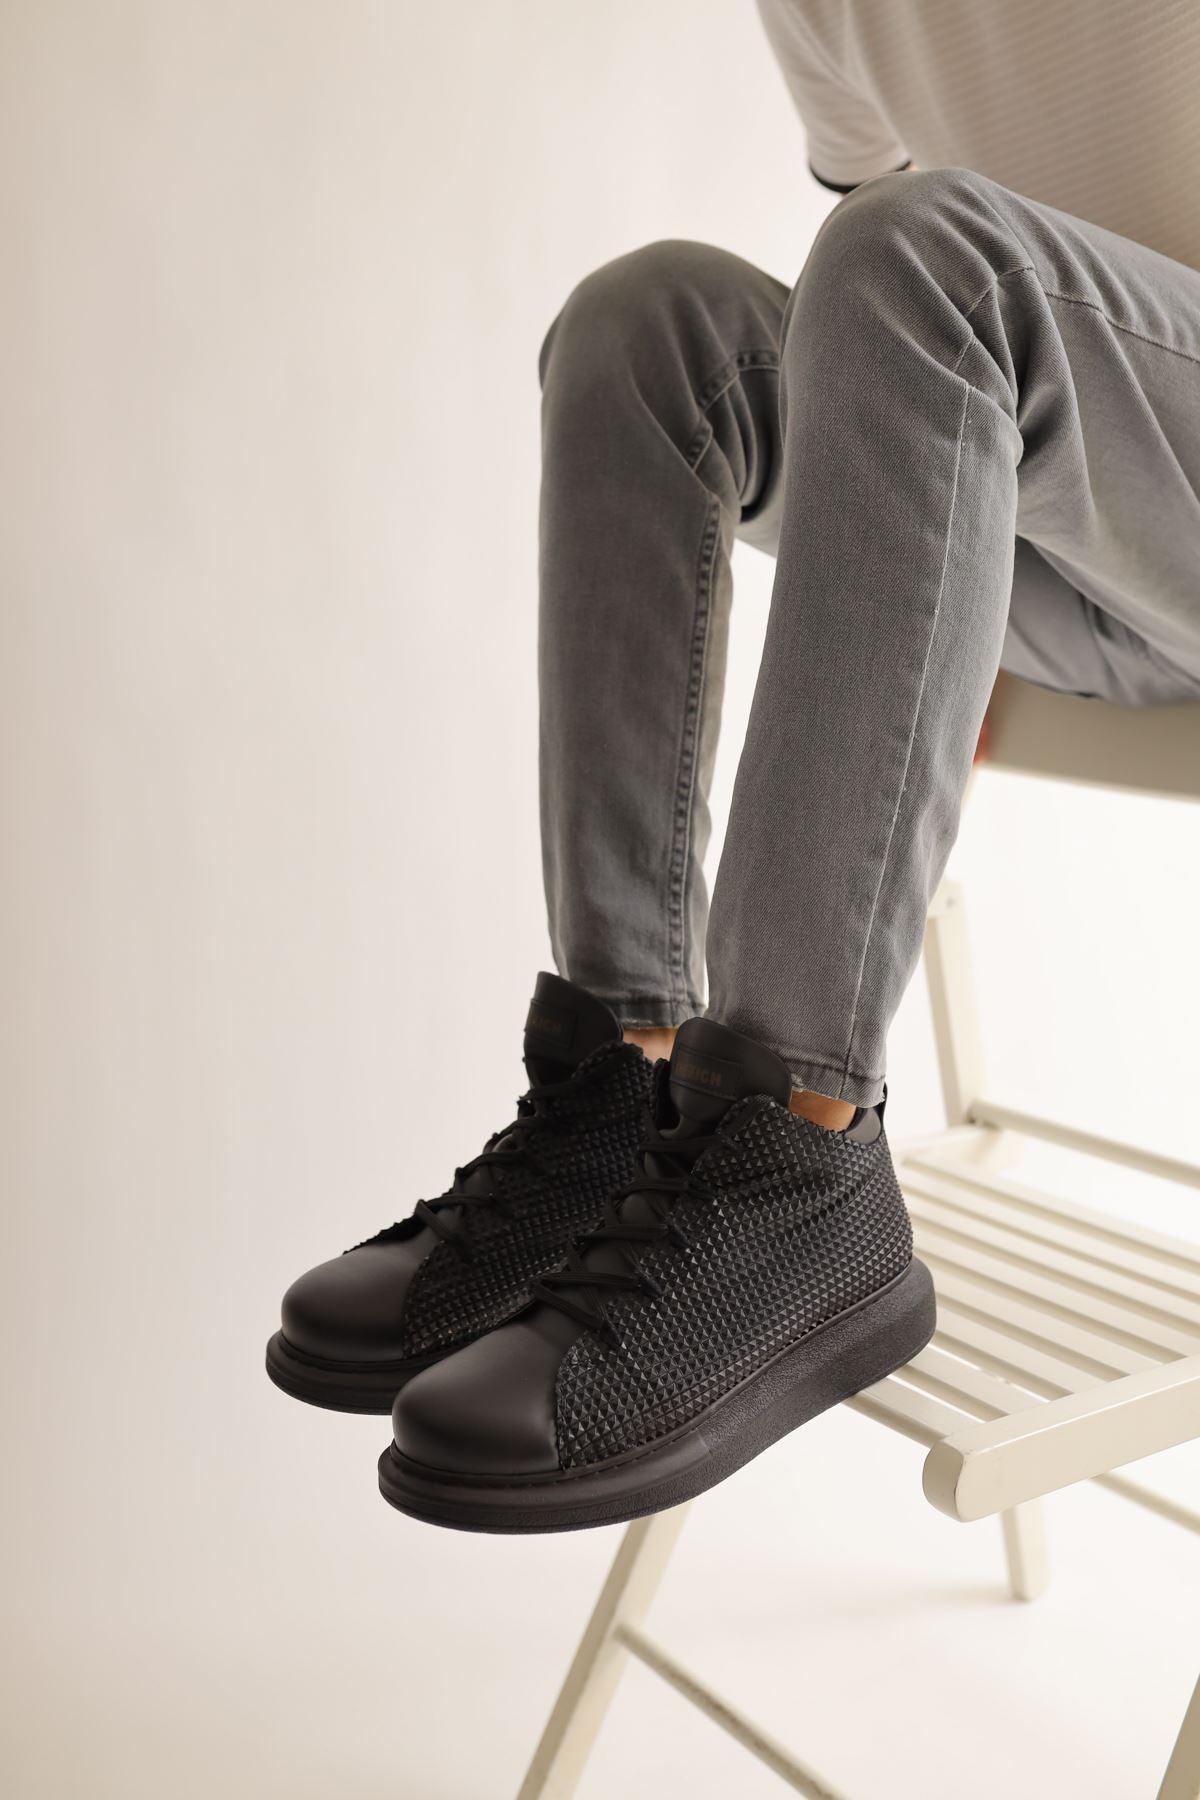 CH111 men's shoes sneakers Garni Black /Black - STREET MODE ™